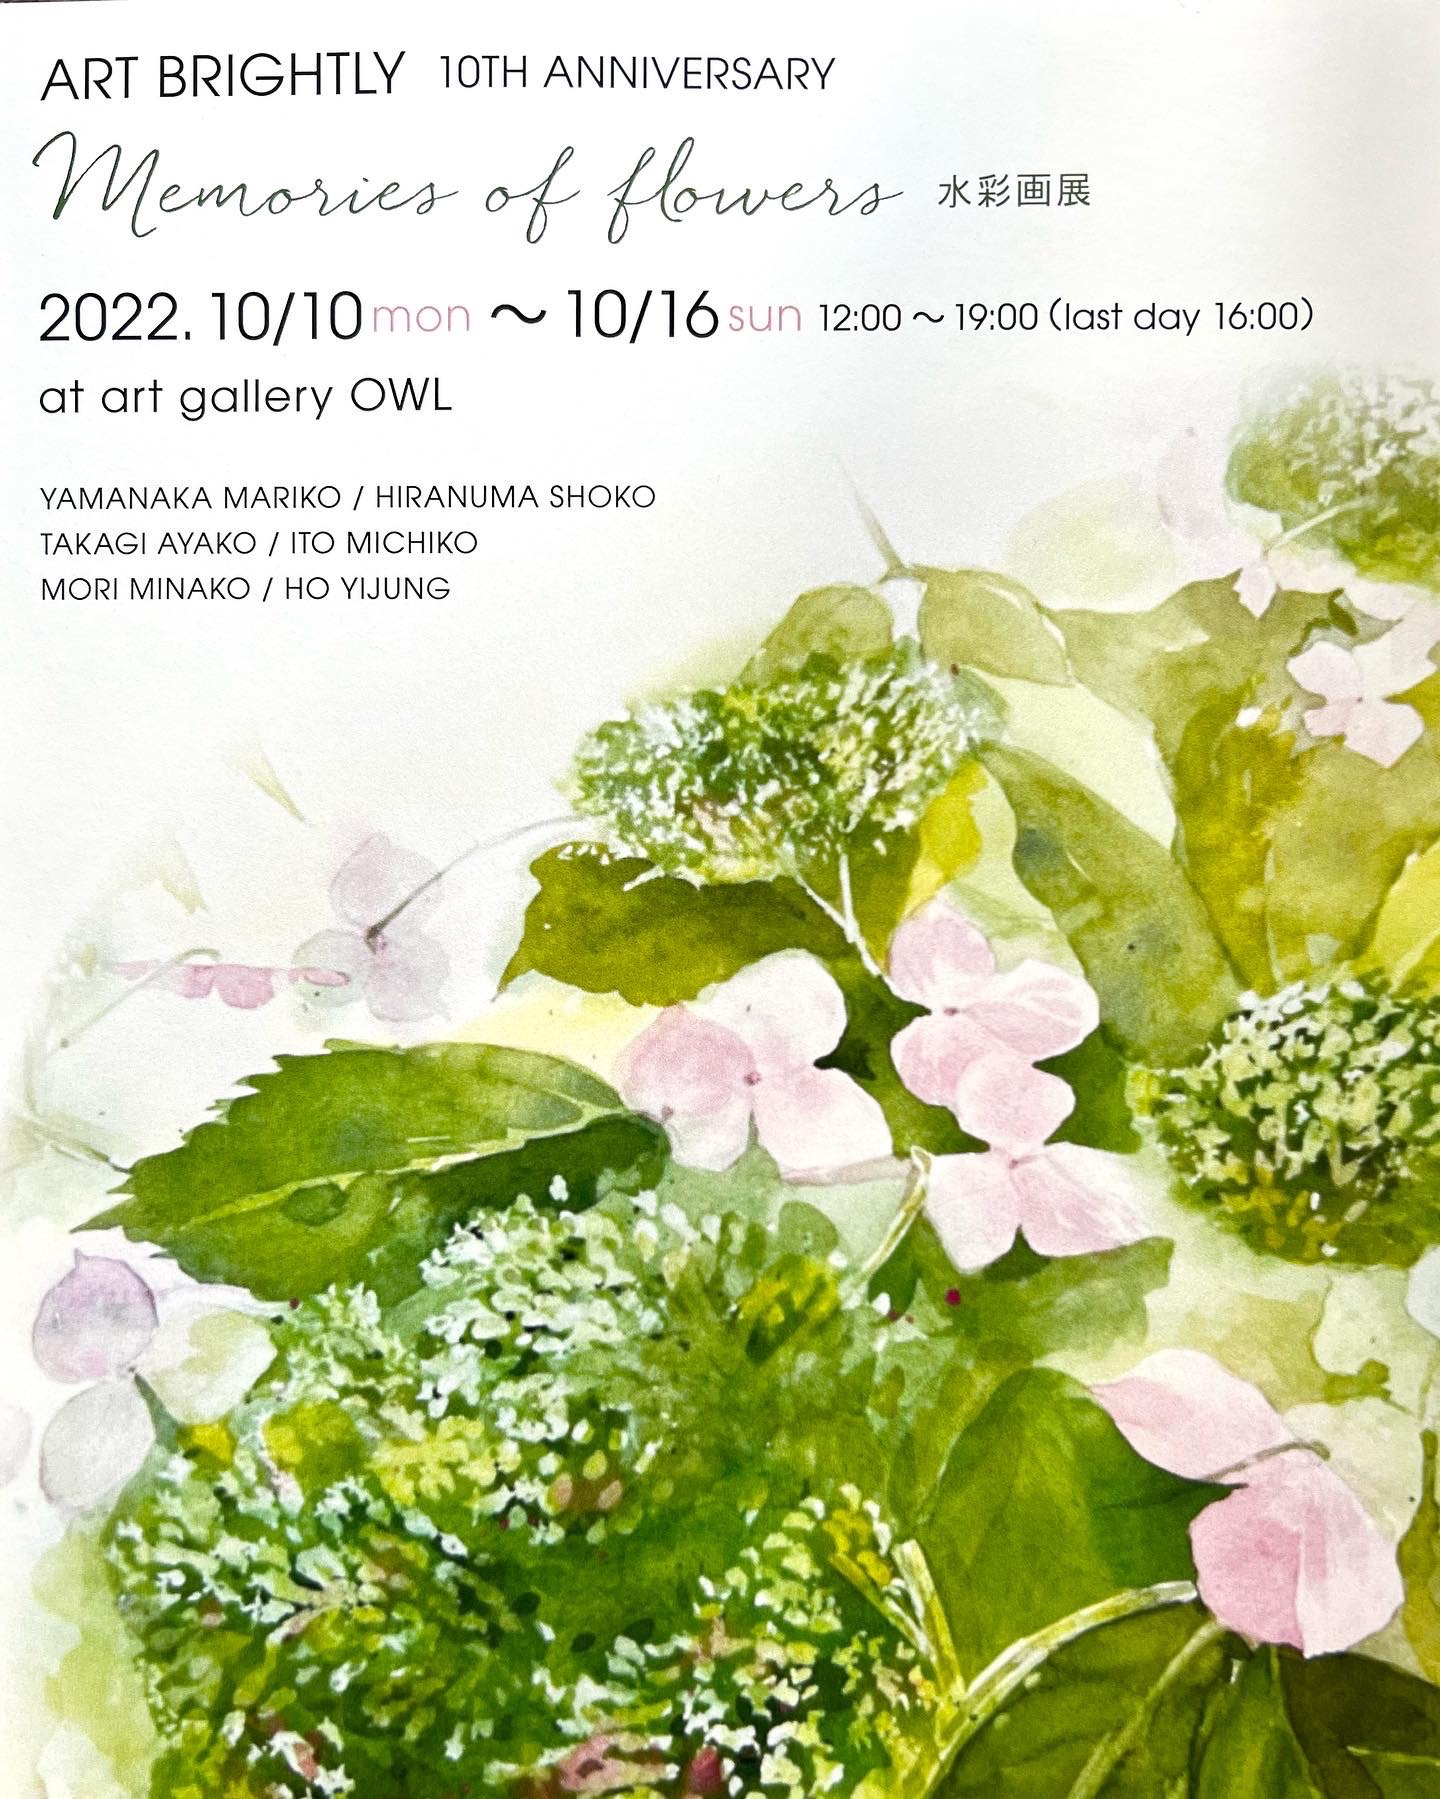 10TH ANNIVERSARY ART BRIGHTLY 水彩画展 「memories of flowers 